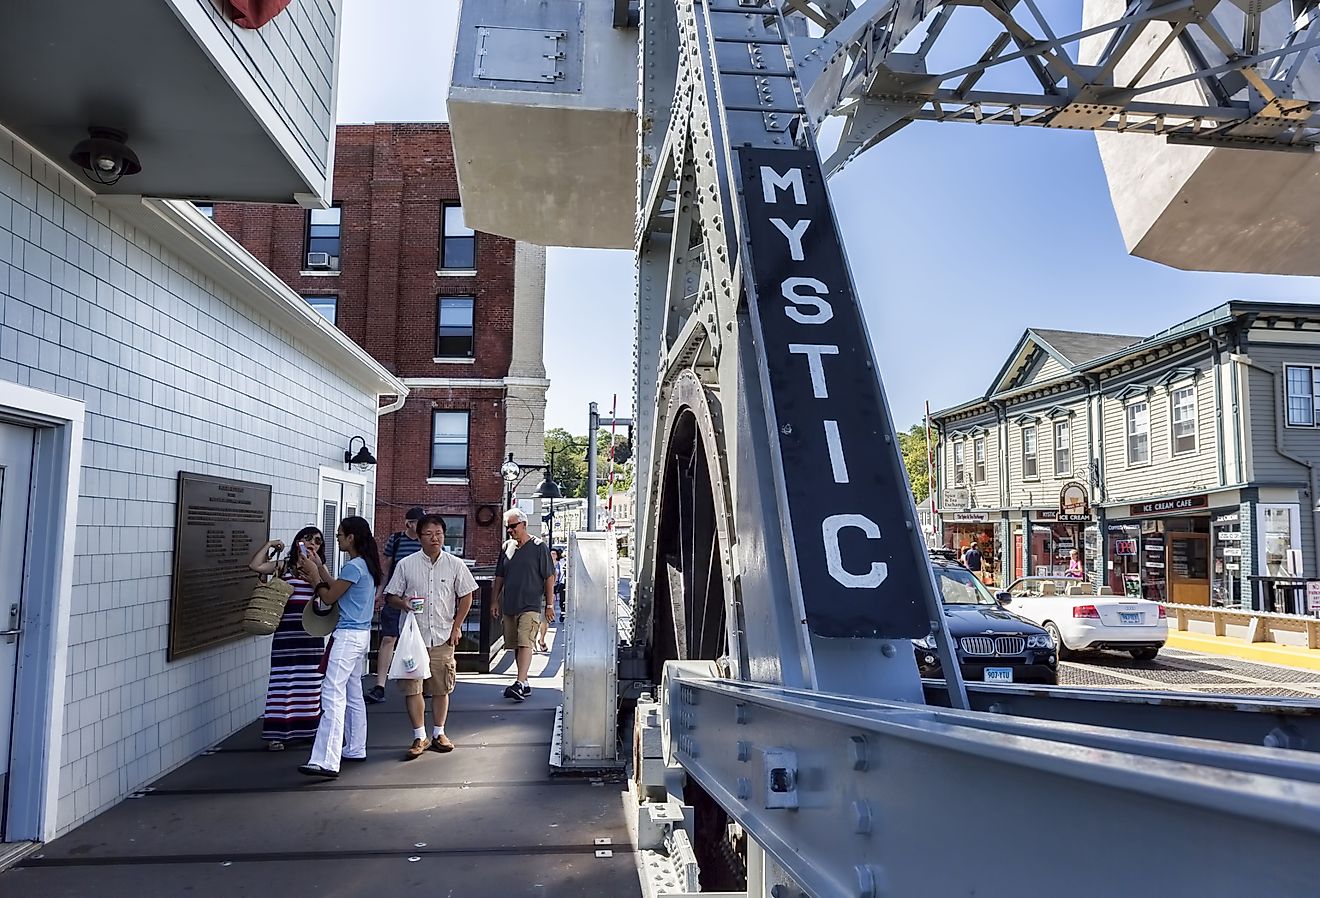 The Mystic bascule bridge spans the Mystic river, in Mystic, Connecticut. Image credit Paul Latham via Shutterstock